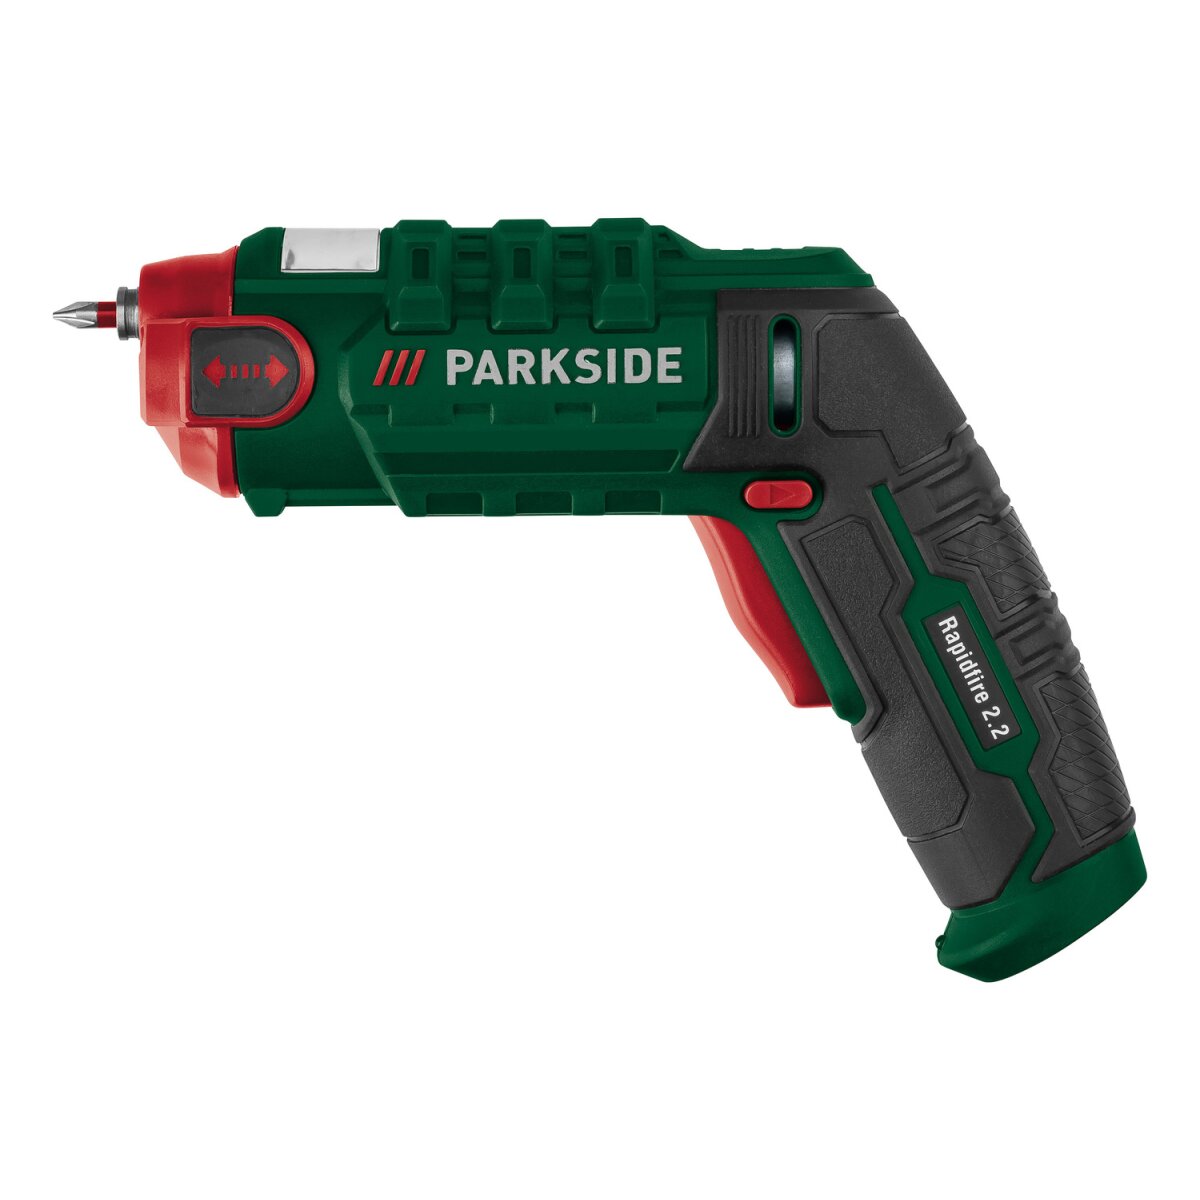 PARKSIDE® 4 V Akku-Wechselbitschrauber »Rapidfire 2.2«, inkl. Bitset -  B-Ware sehr gut, 16,99 €